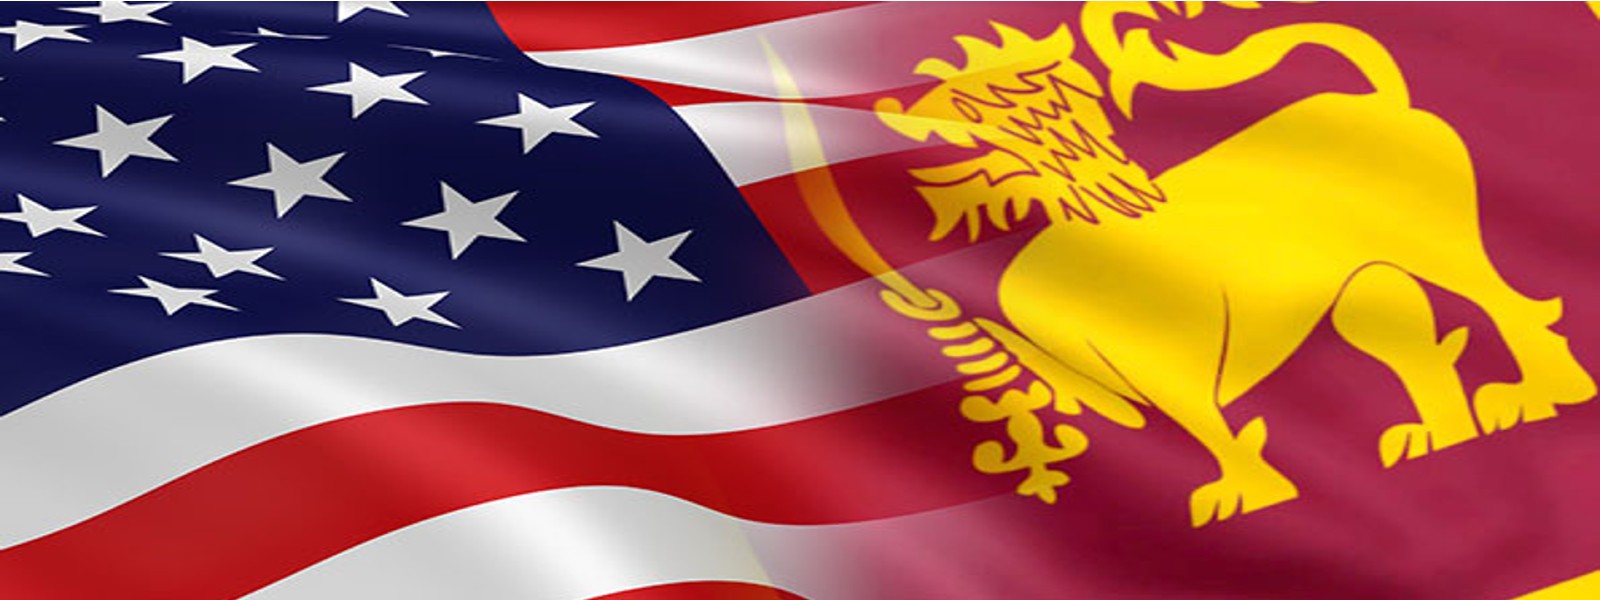 US remains a friend and partner to Sri Lanka - Amb